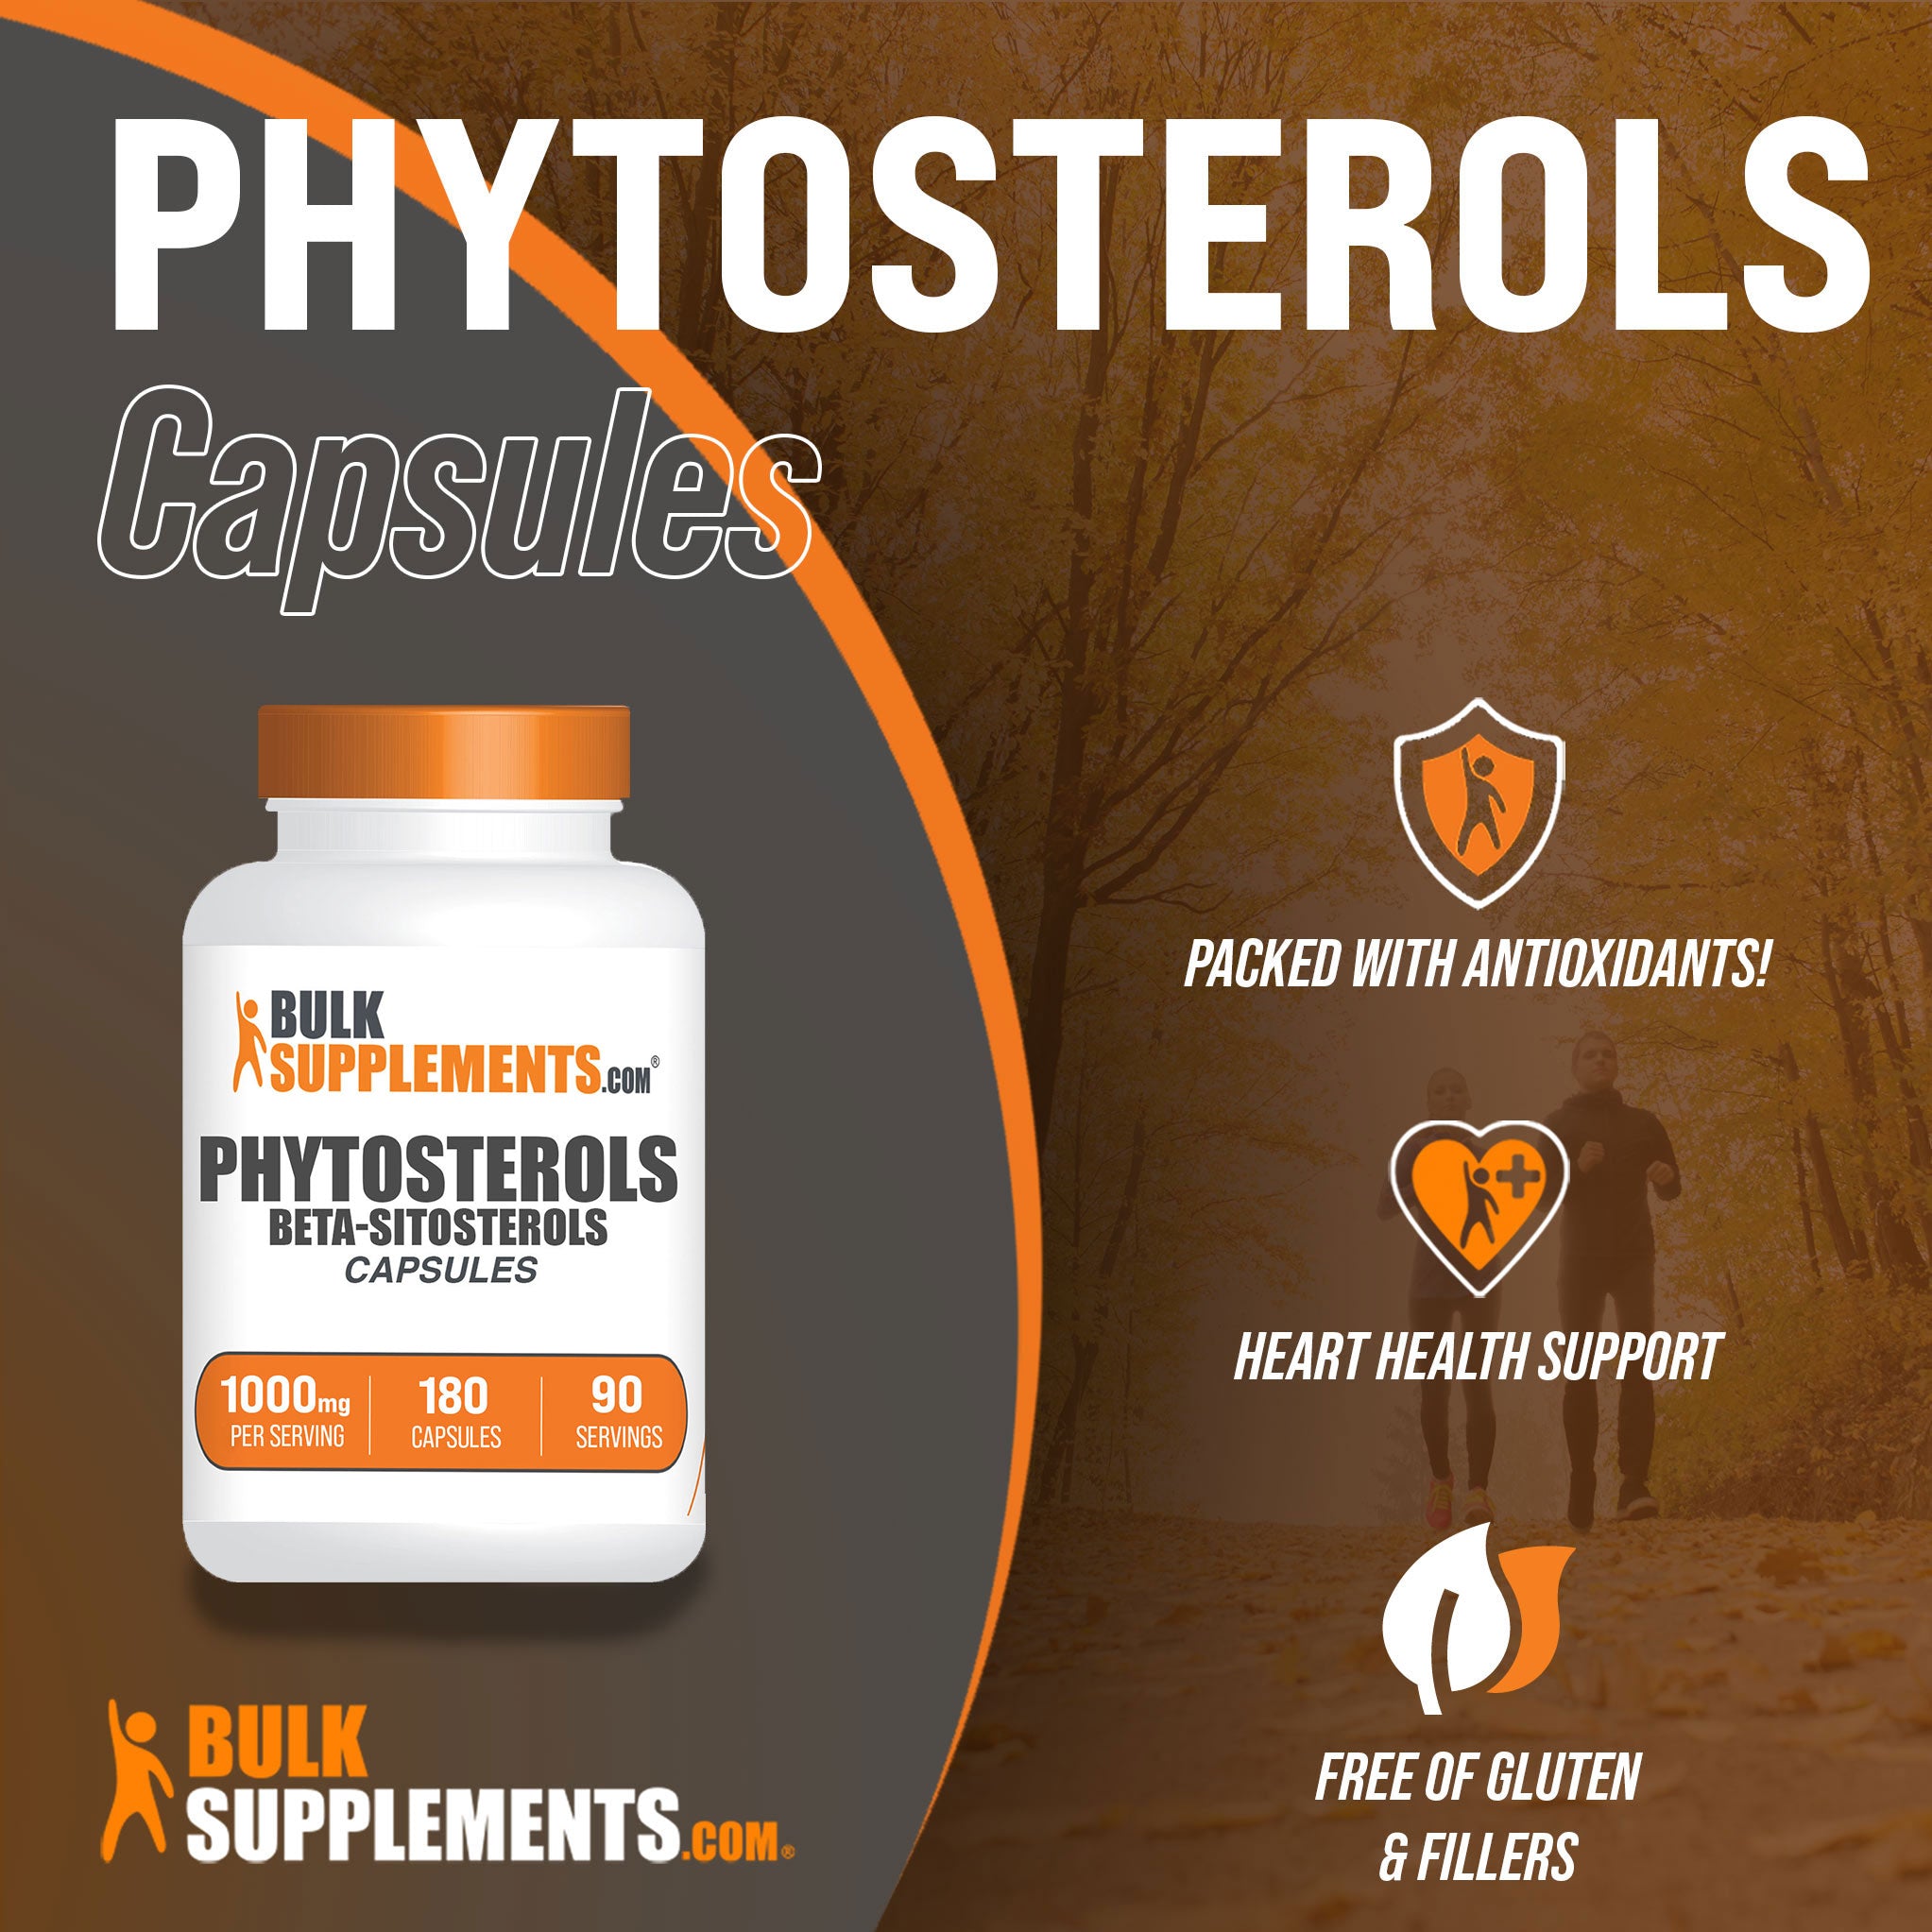 phytosterols benefits